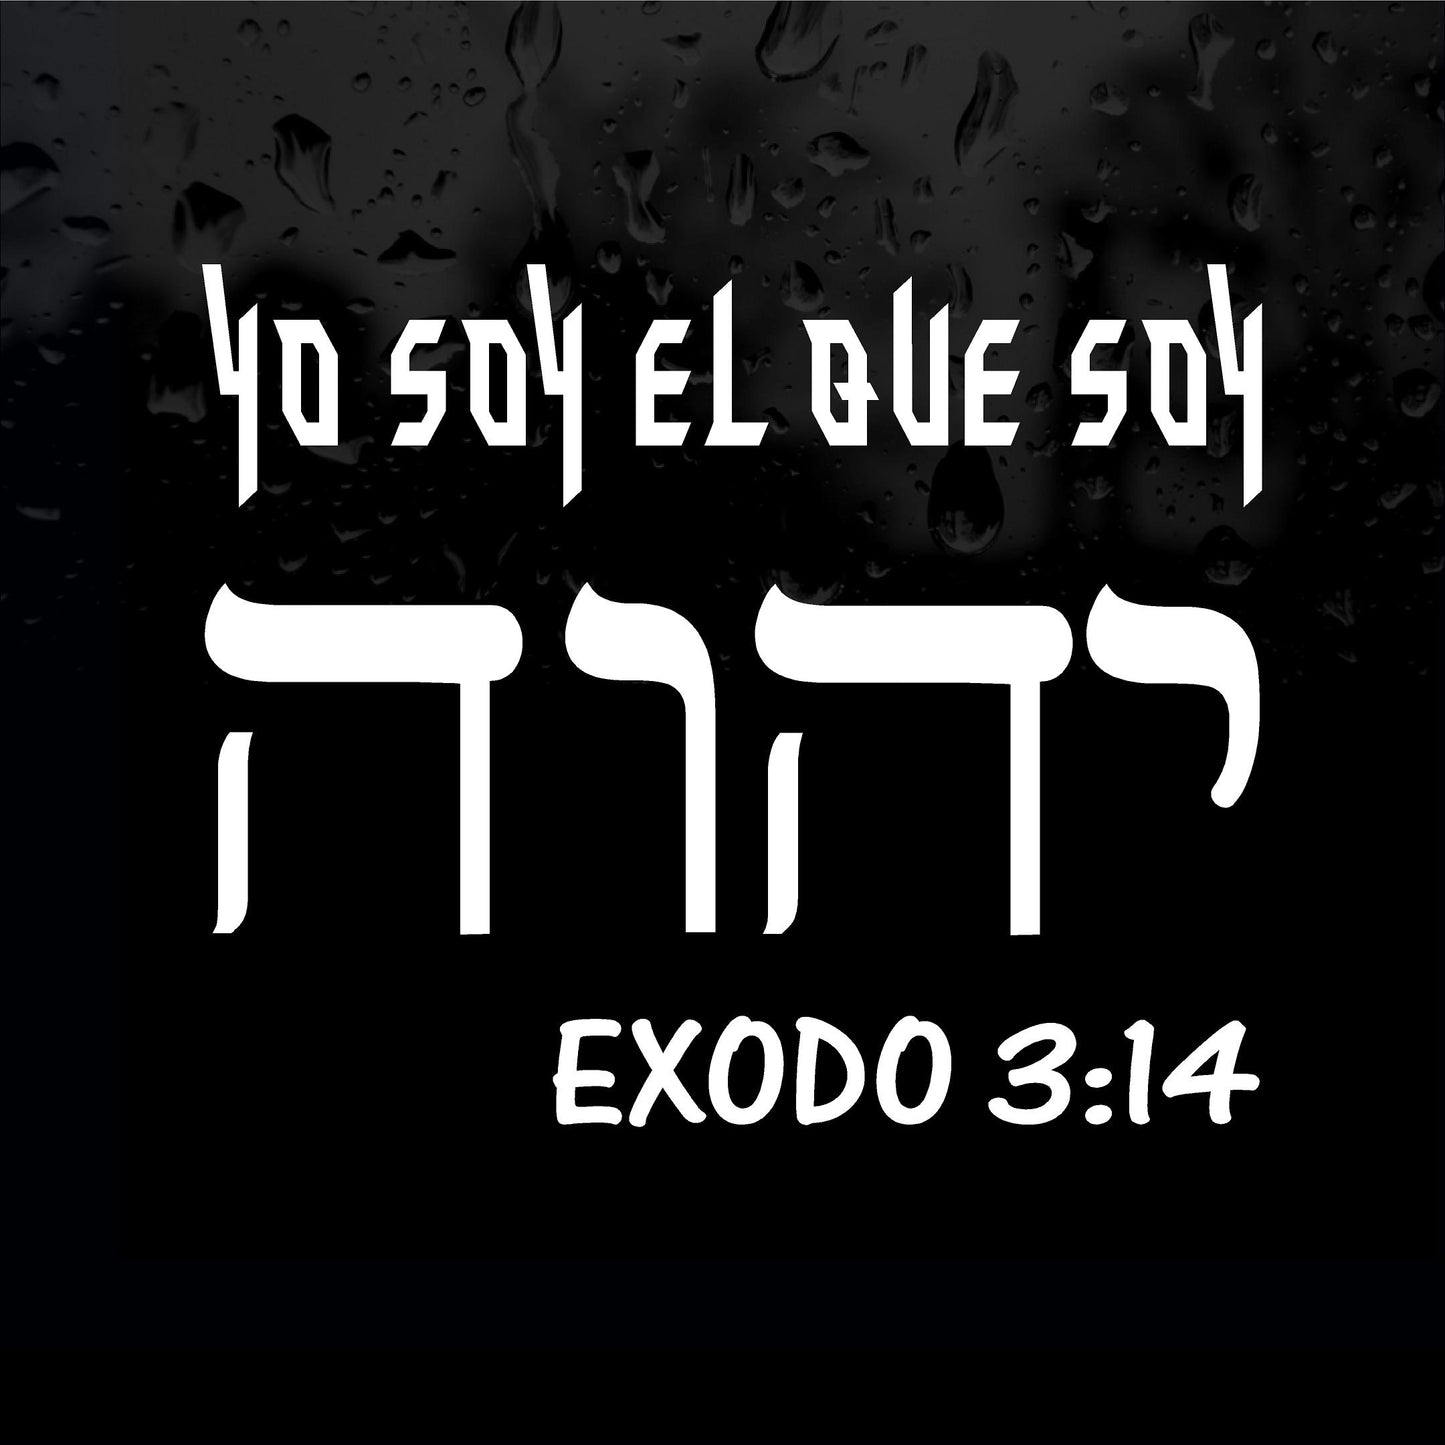 Decals - Religious - YO SOY EL QUE SOY TETRAGRAMATON YHWH BIBLIA EXODO 3:14. Sticker